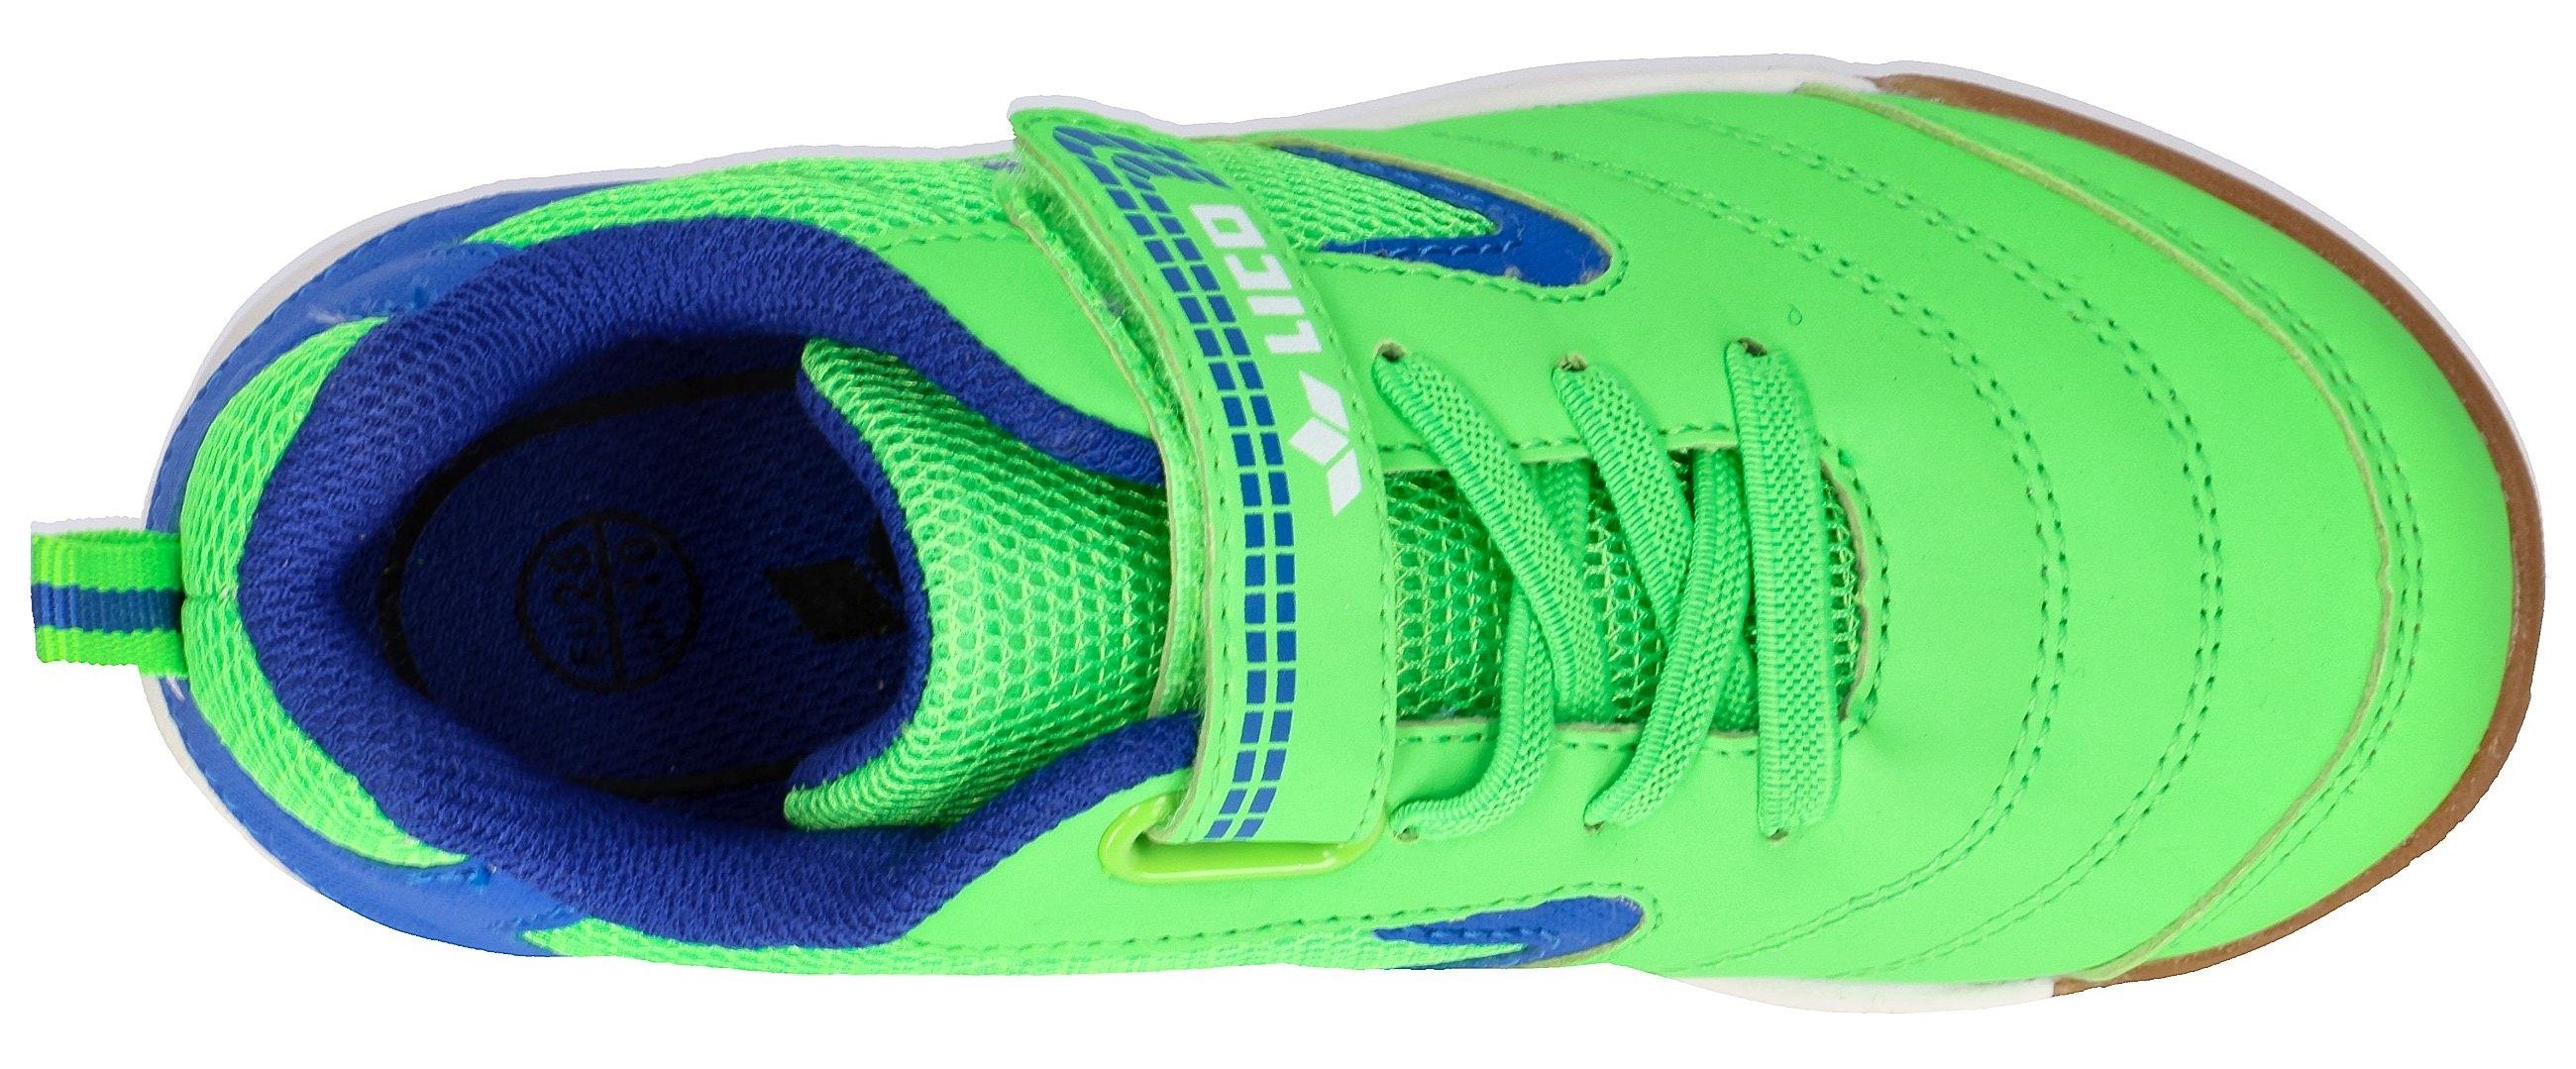 Ari Laufsohle heller mit VS Lico Sneaker WMS grün-blau